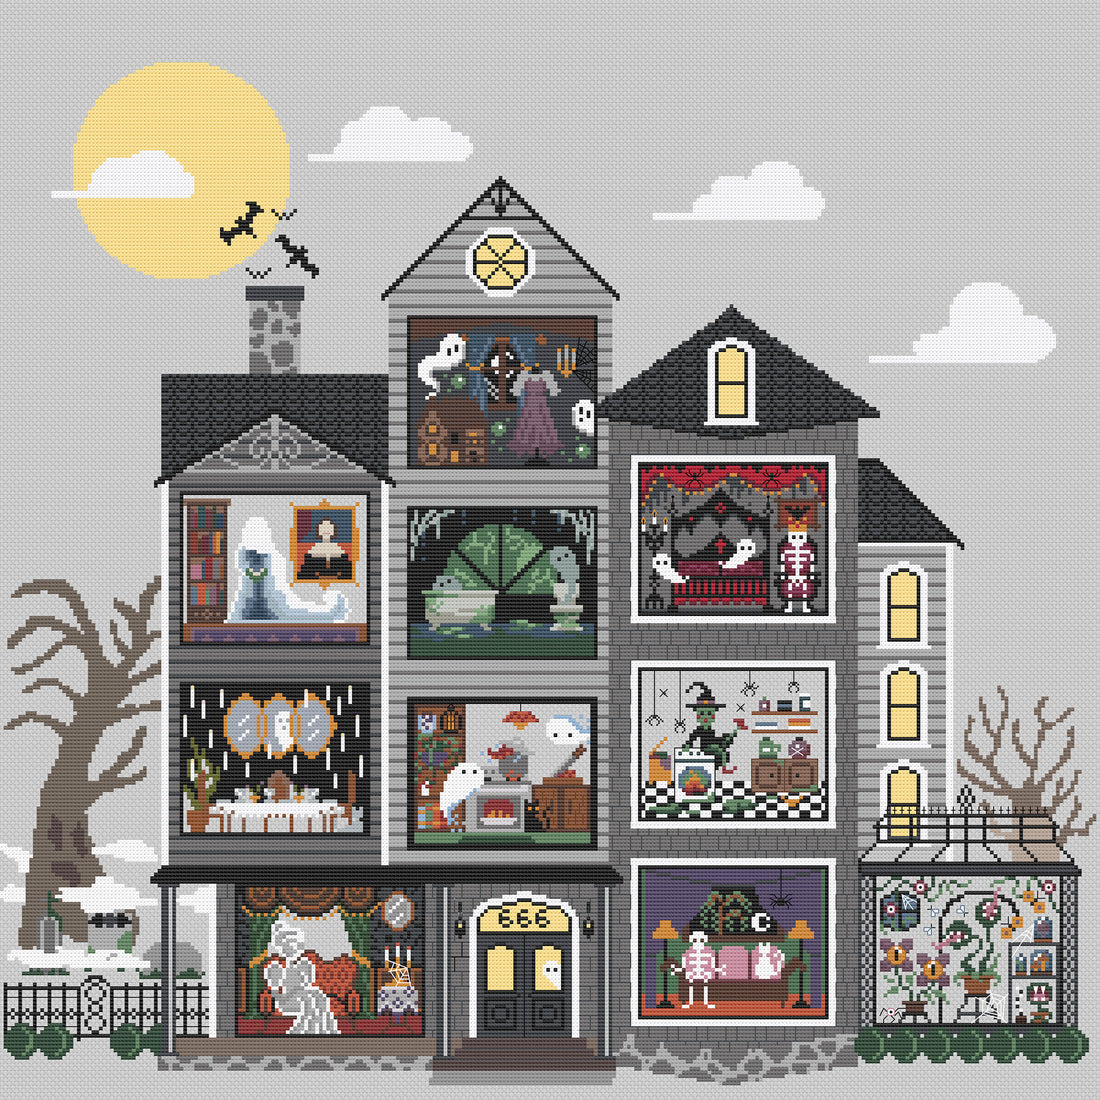 The Haunted House cross stitch pattern